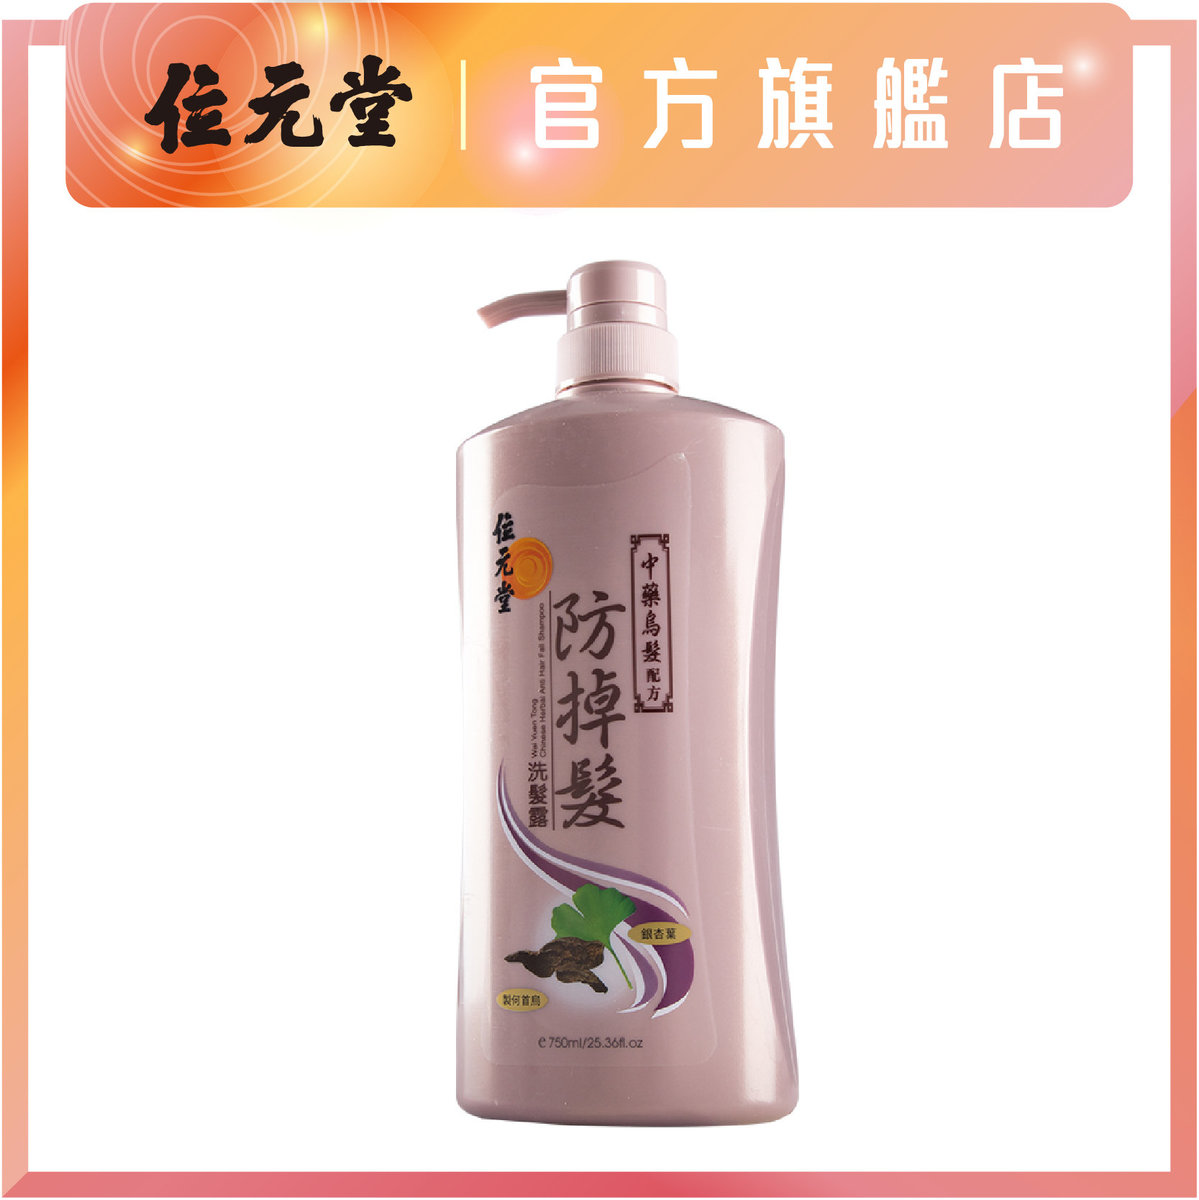 Chinese Herbal Anti Hair Fall Shampoo (Hair Darkening Formula) 750ml